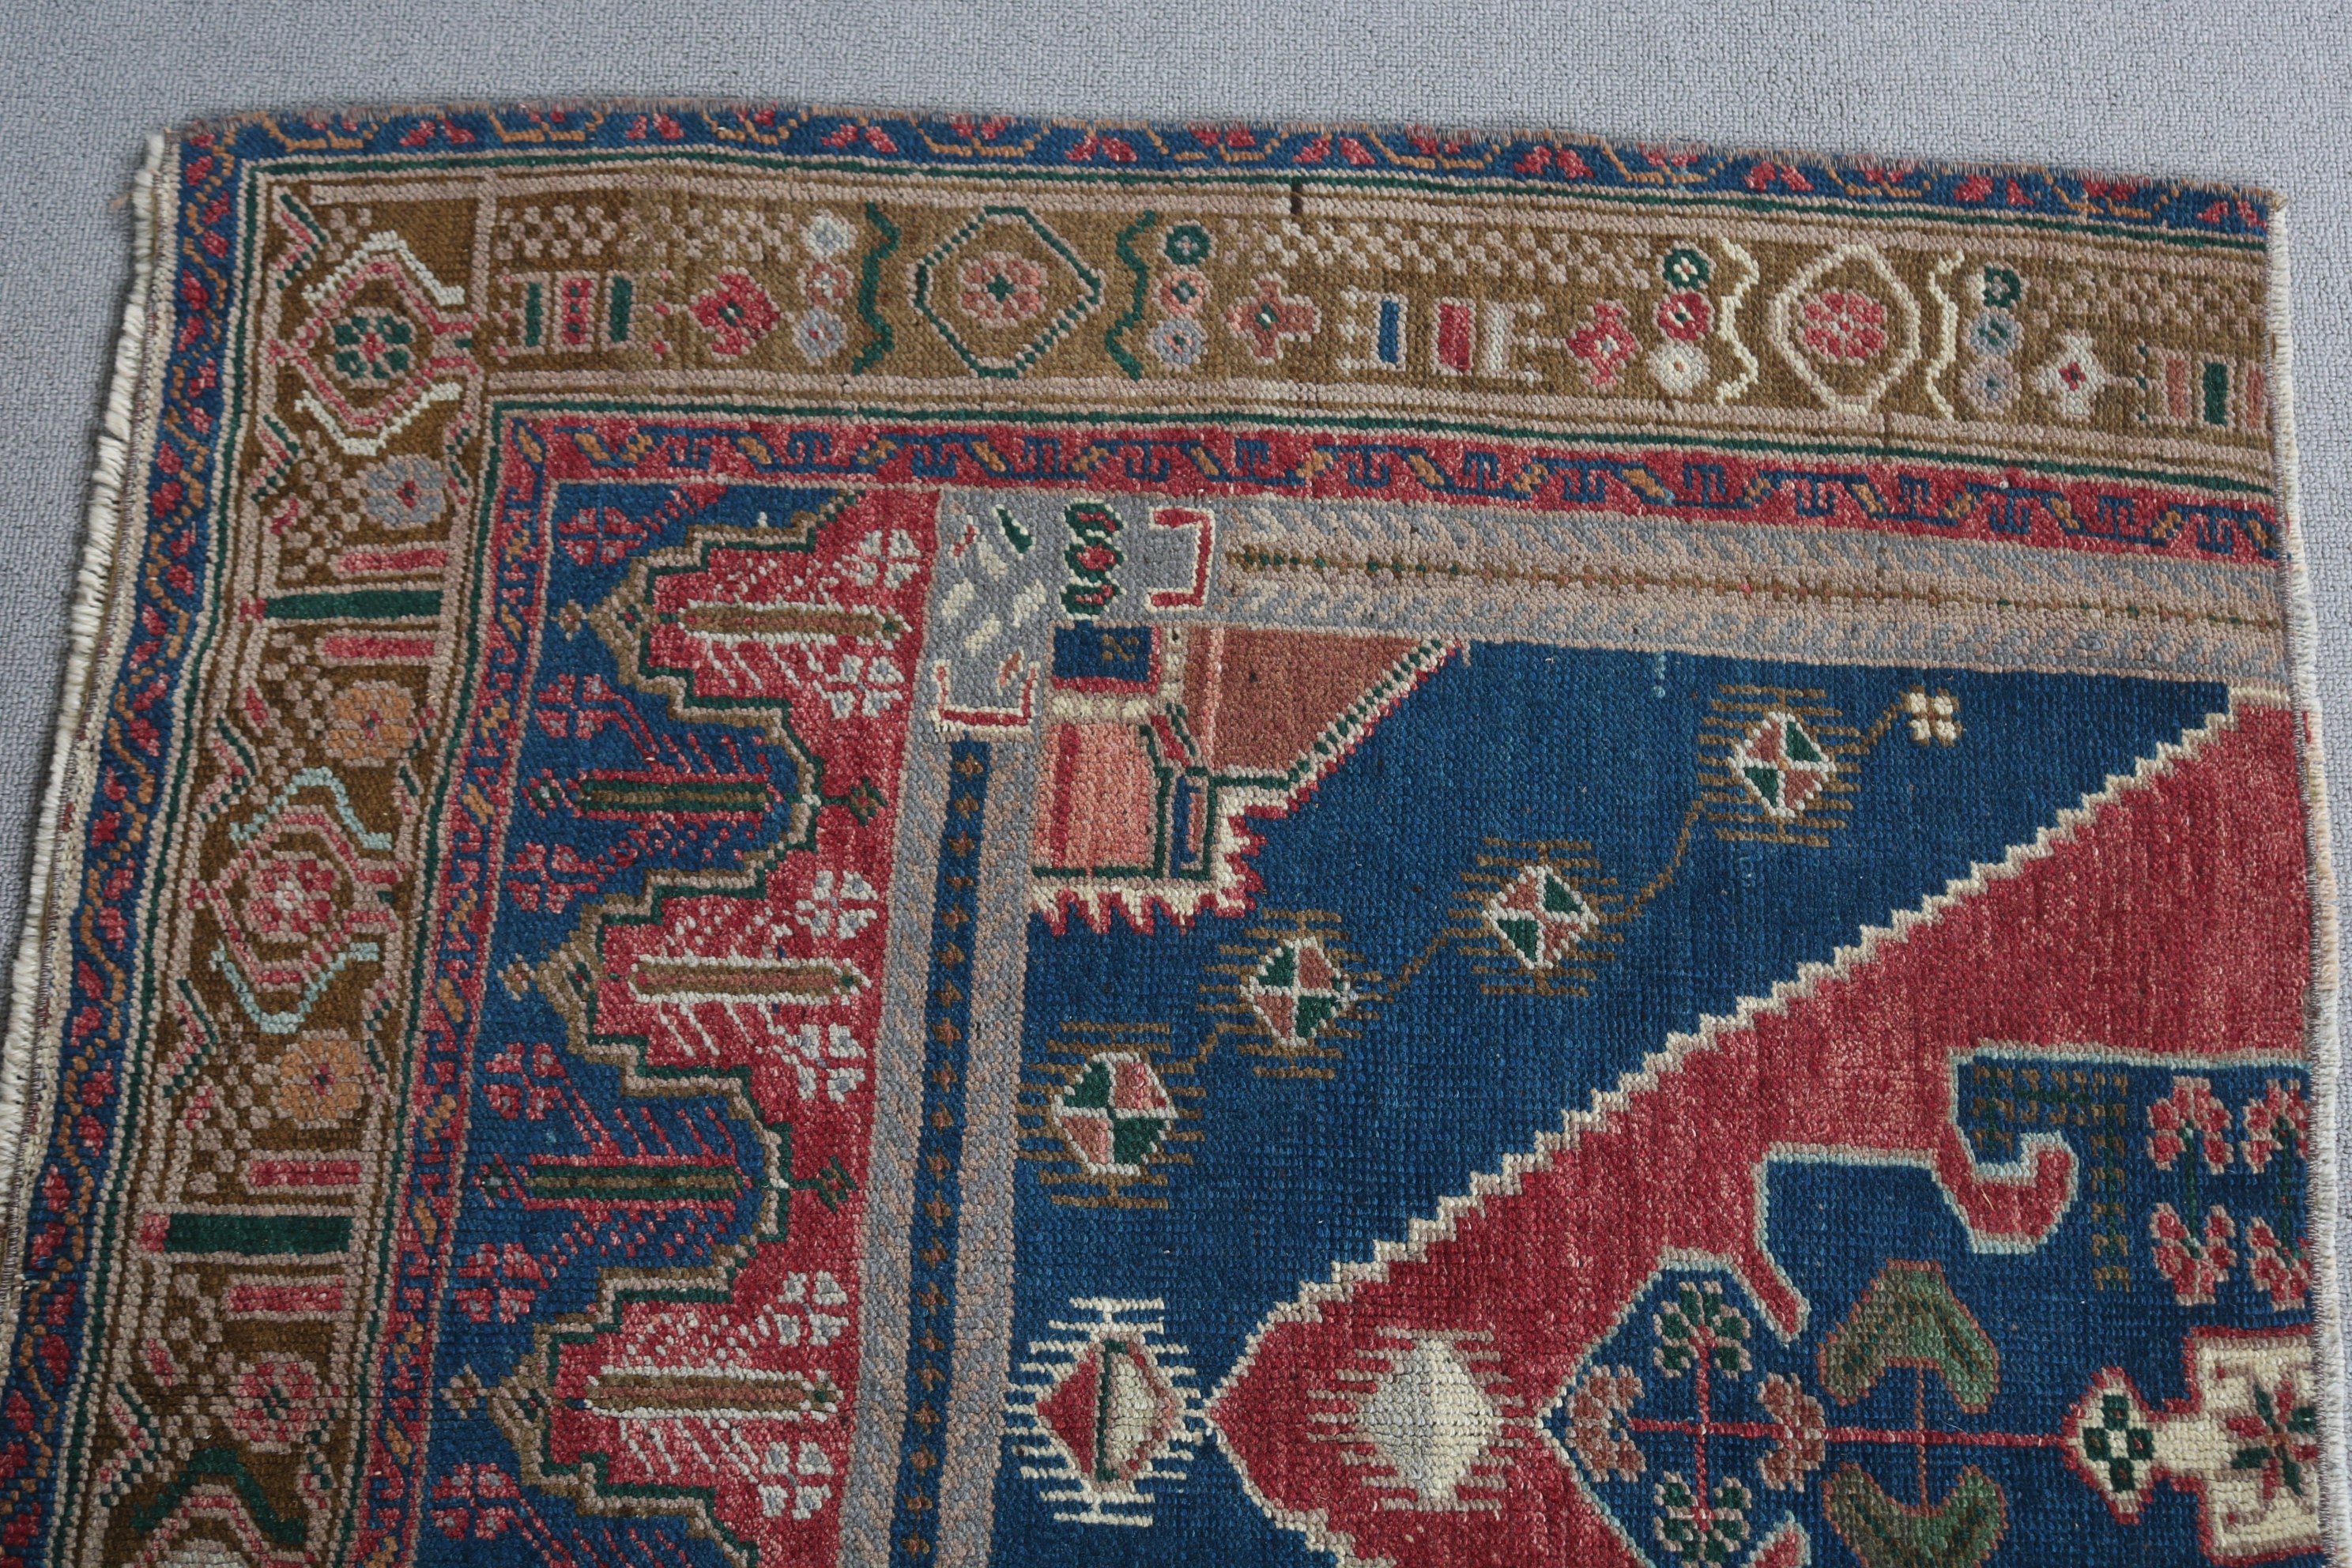 Turkish Rugs, Nursery Rug, Entry Rug, Vintage Rug, Blue Moroccan Rugs, Rugs for Bath, Moroccan Rug, 2.7x3.4 ft Small Rug, Anatolian Rugs